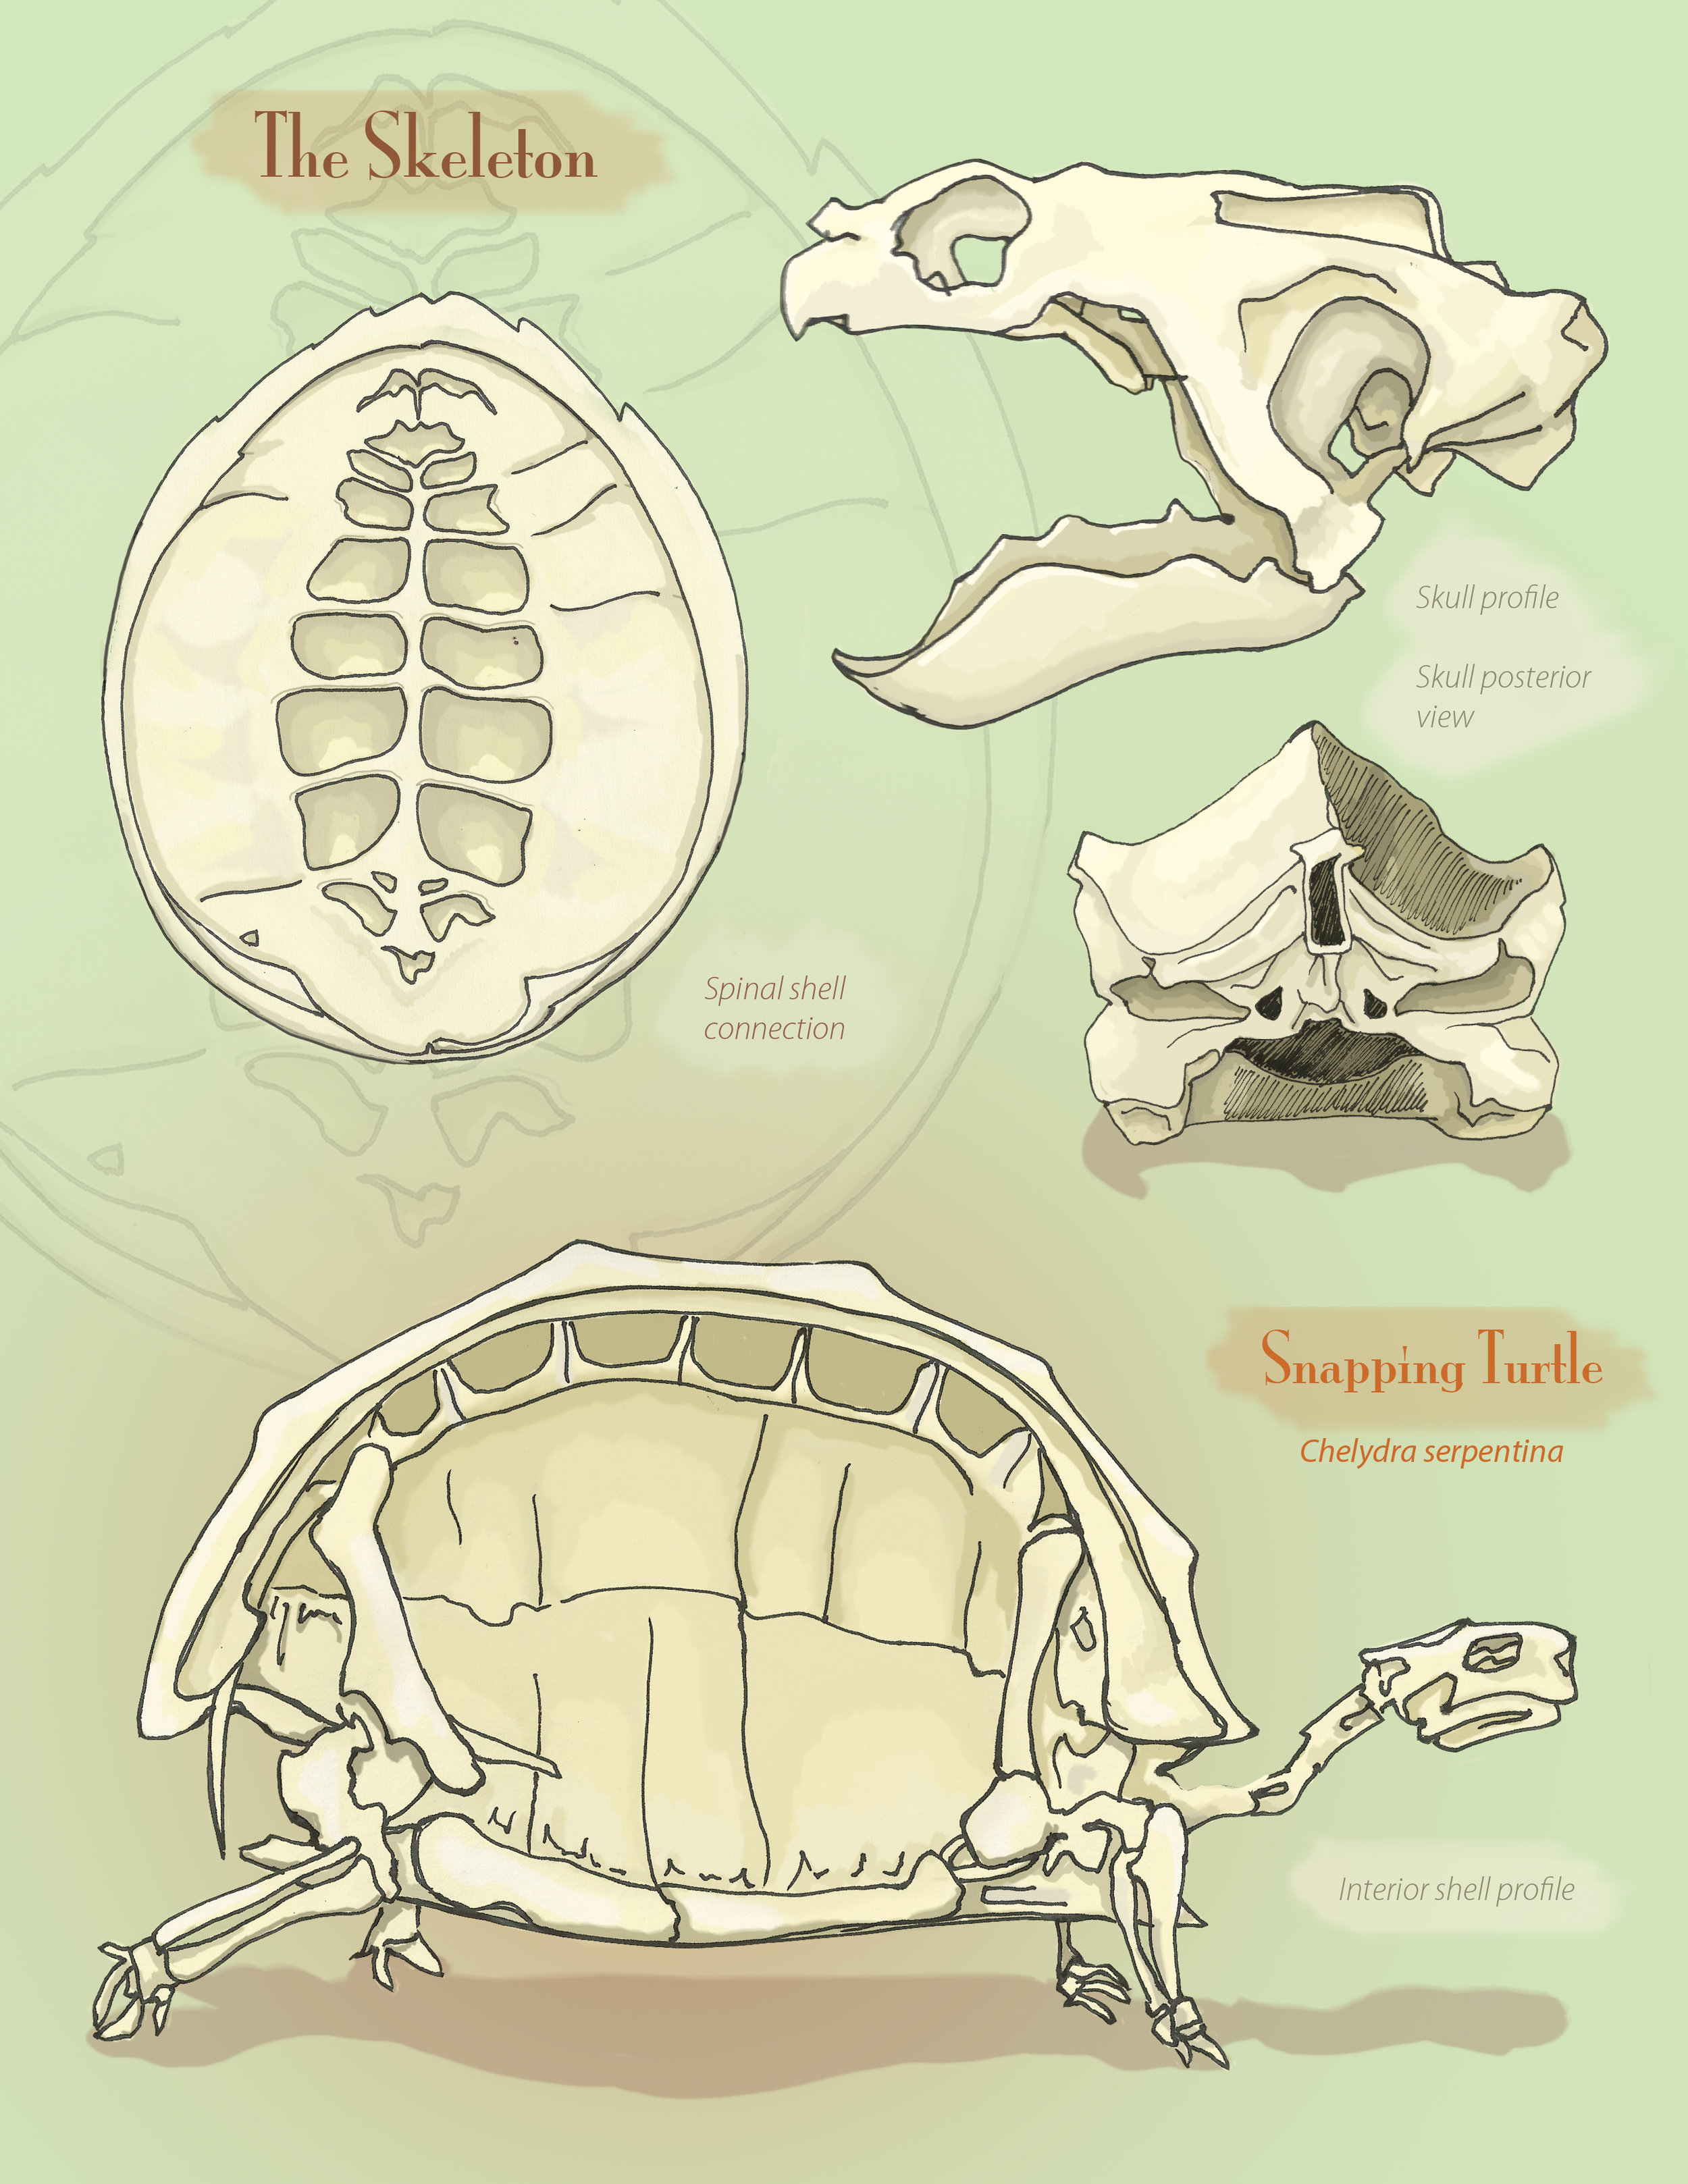 Snapping turtle skeleton